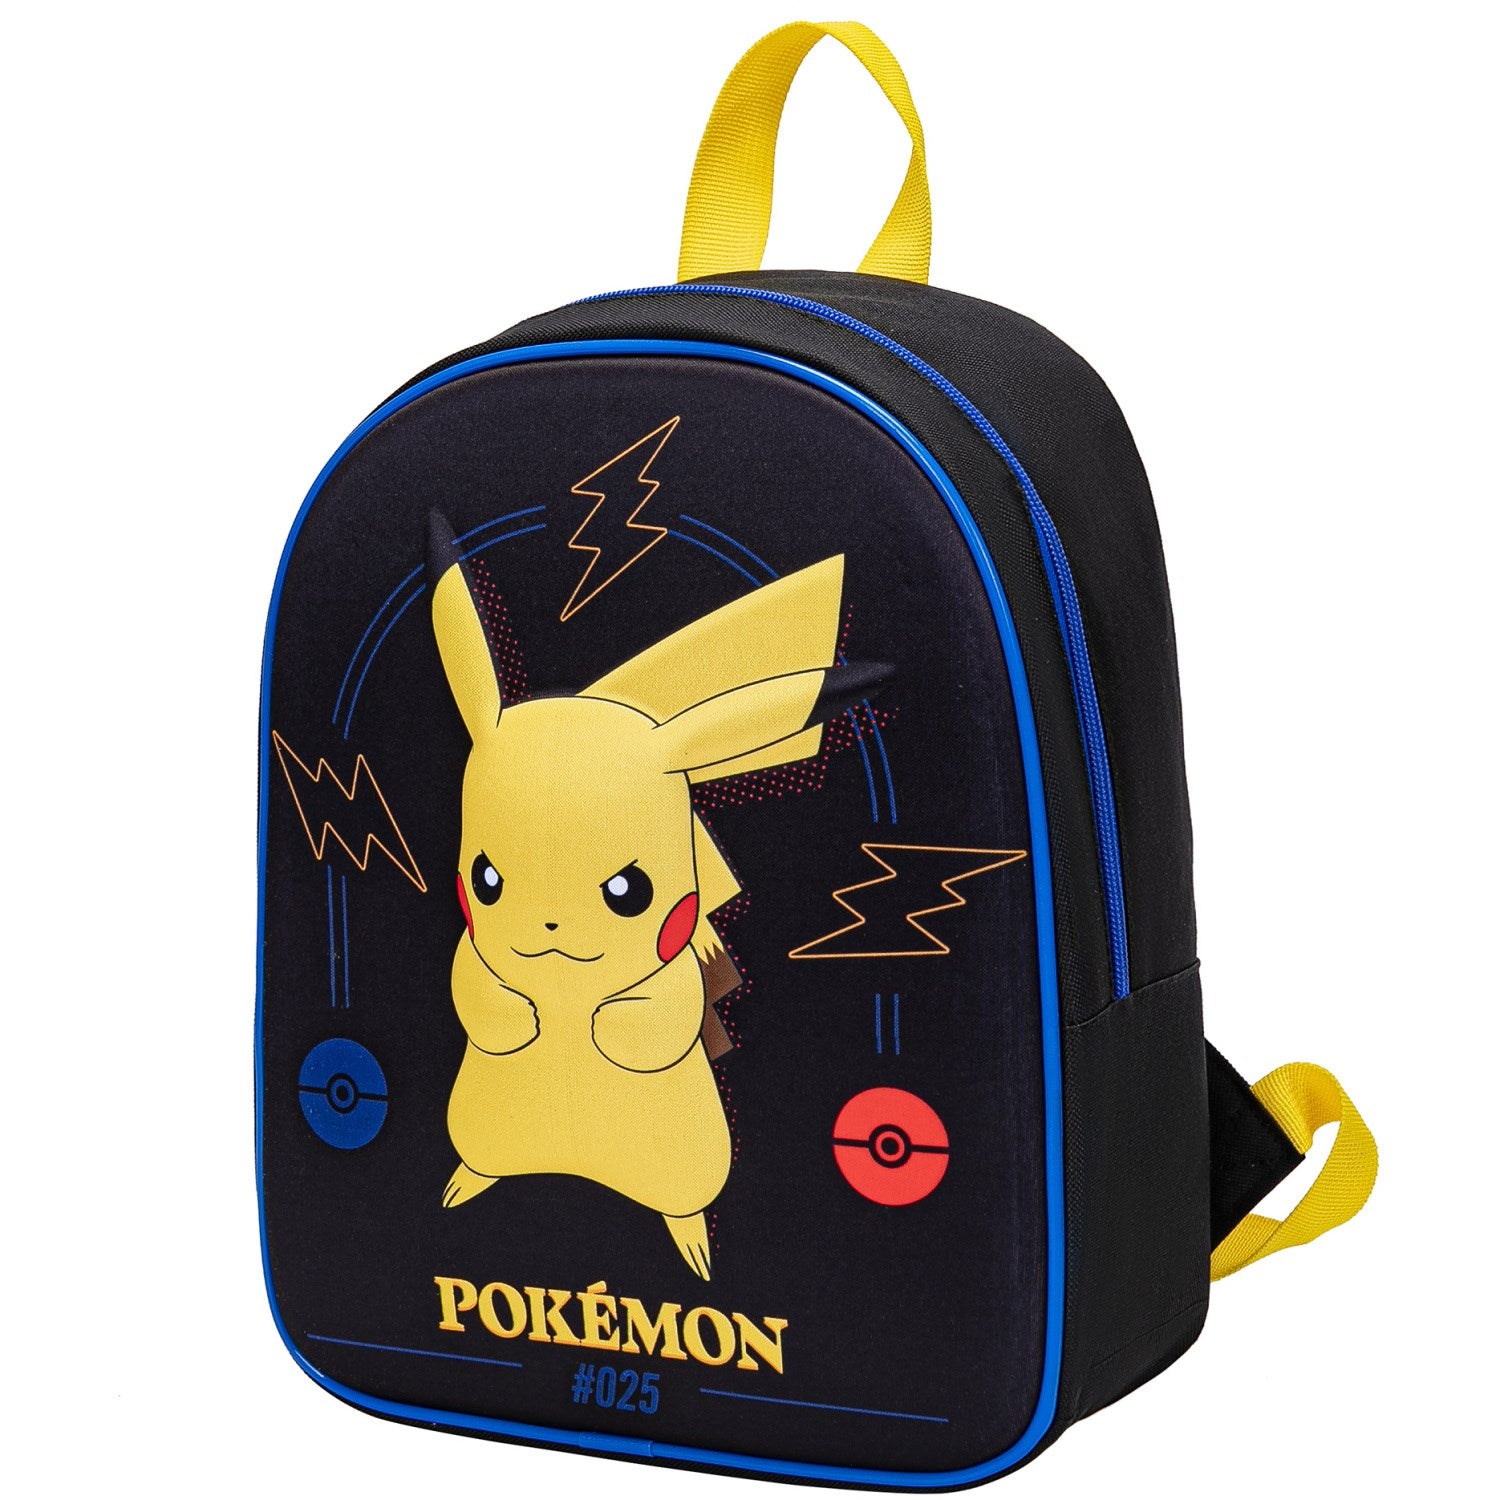 Euromic Pokémon Junior Backpack